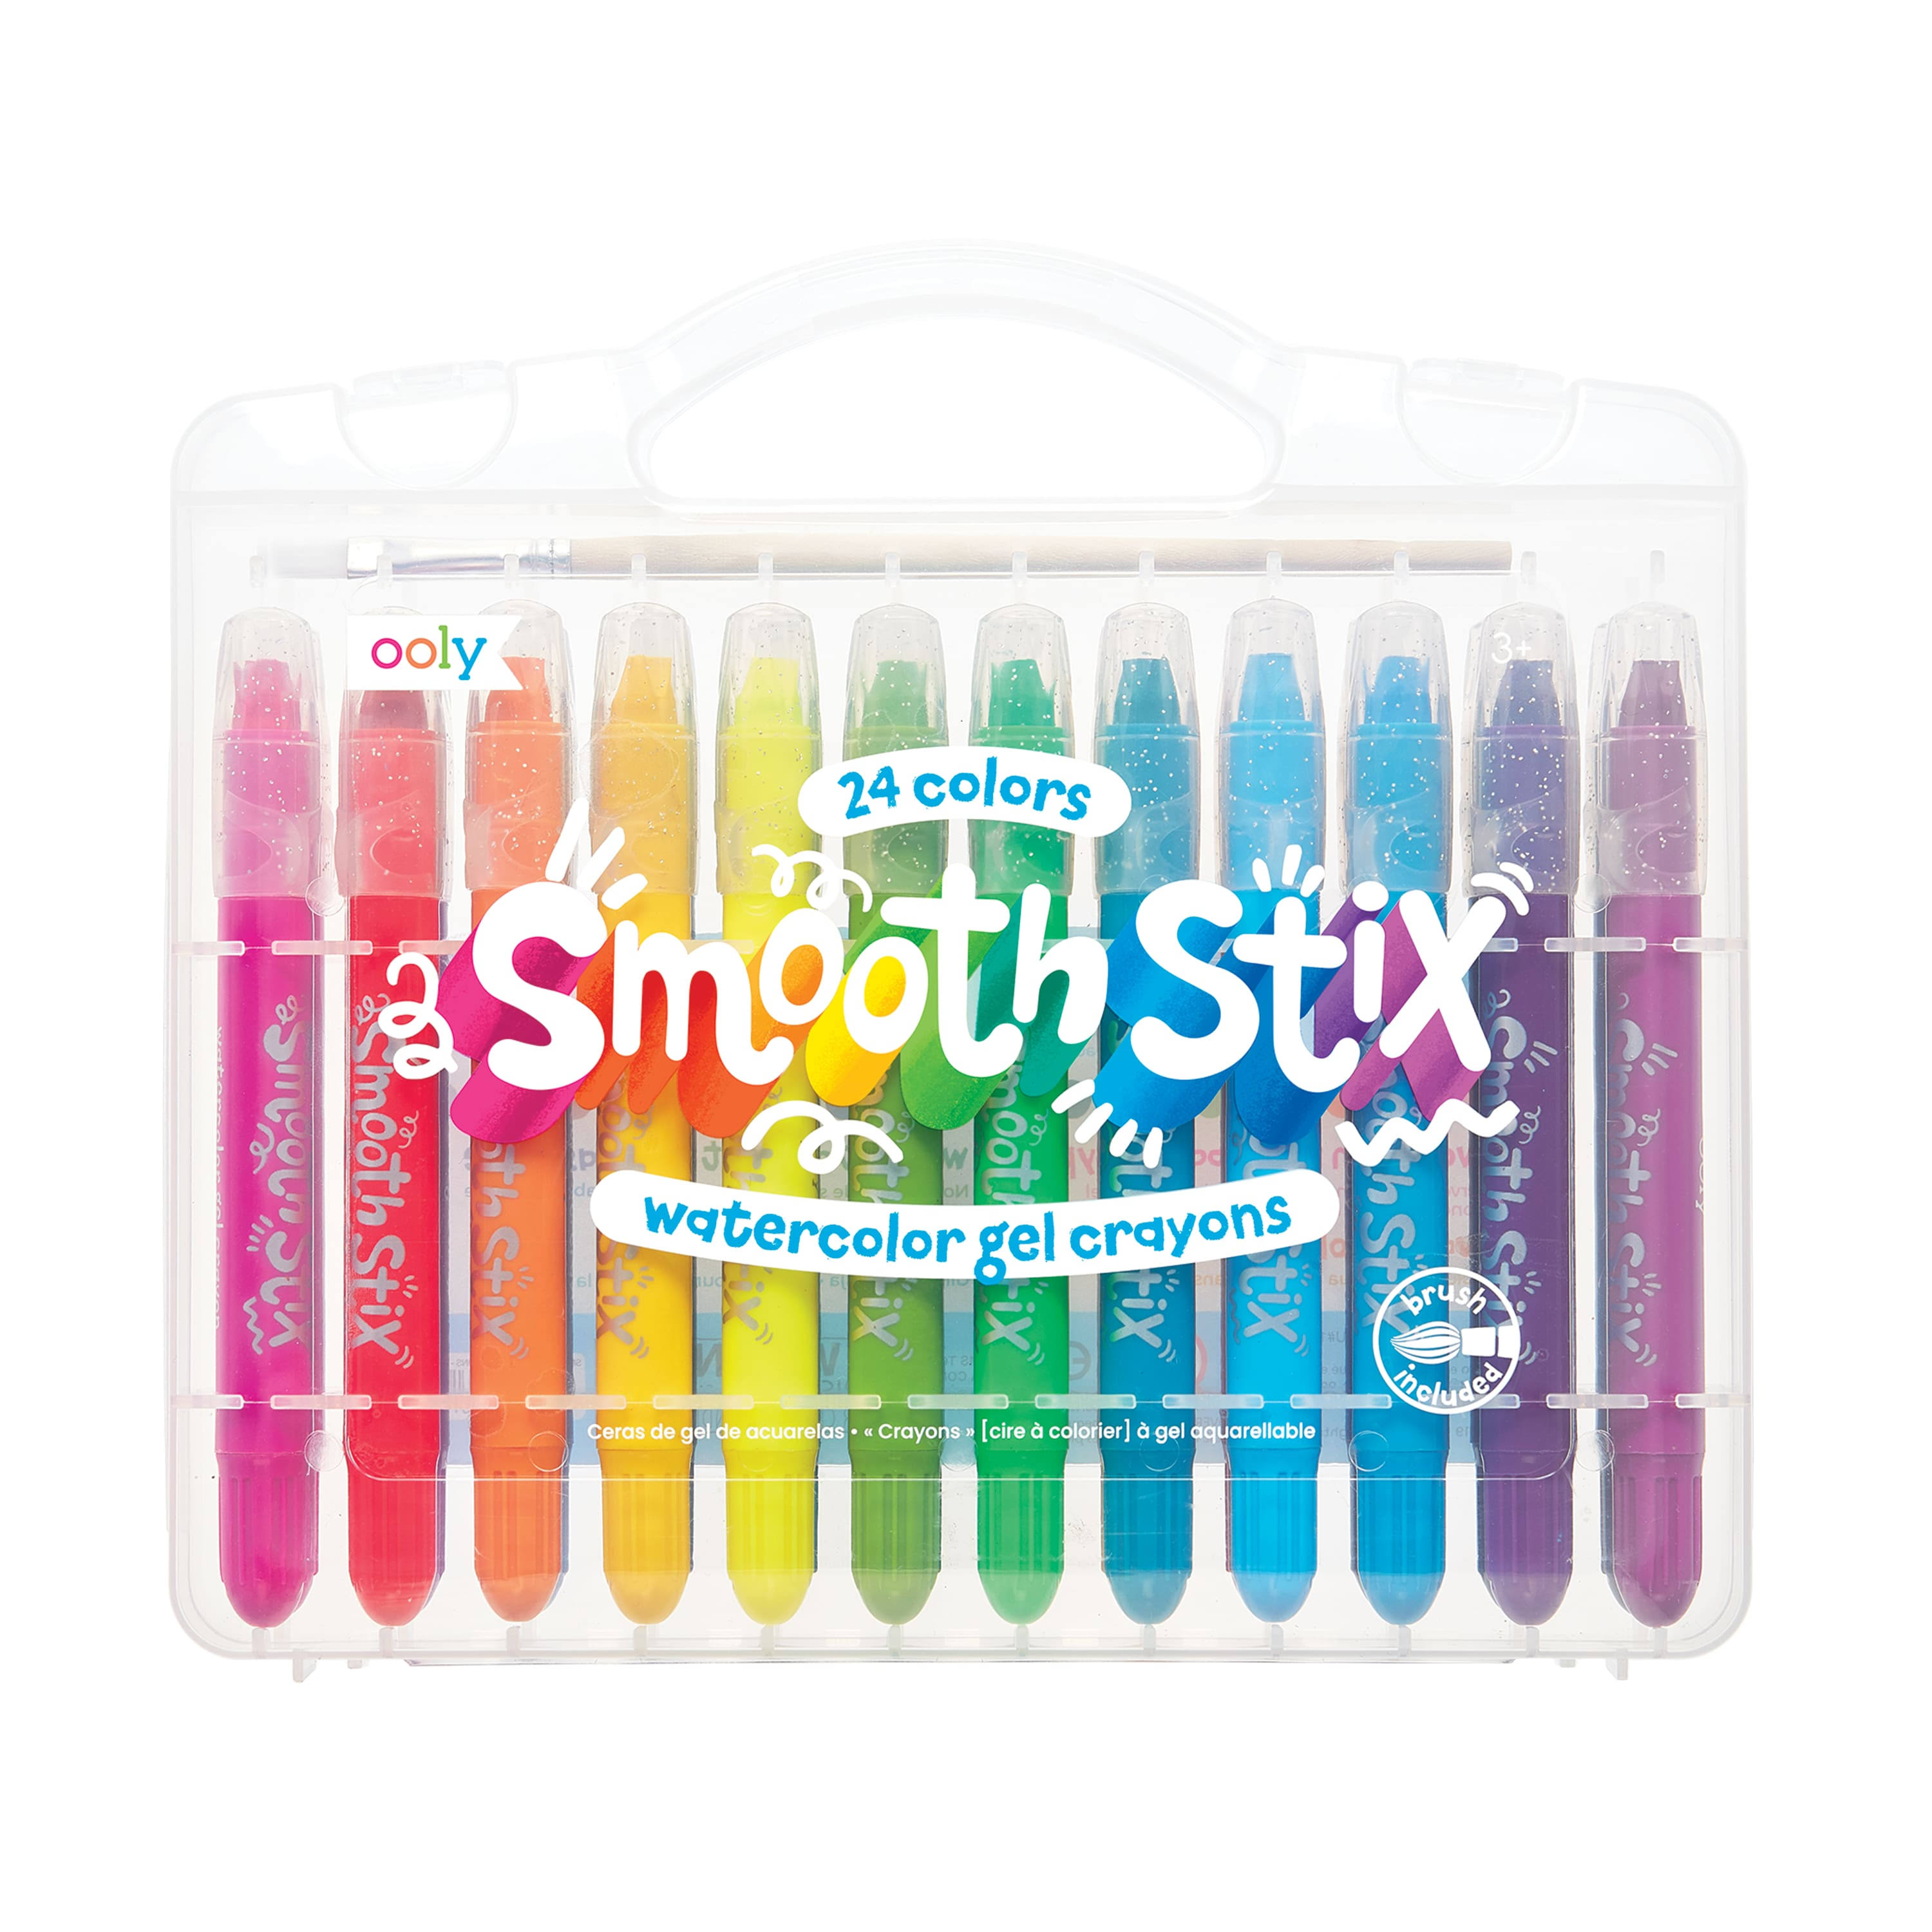 Ooly Smooth Stix watercolor gel crayons - BÉBÉ concept